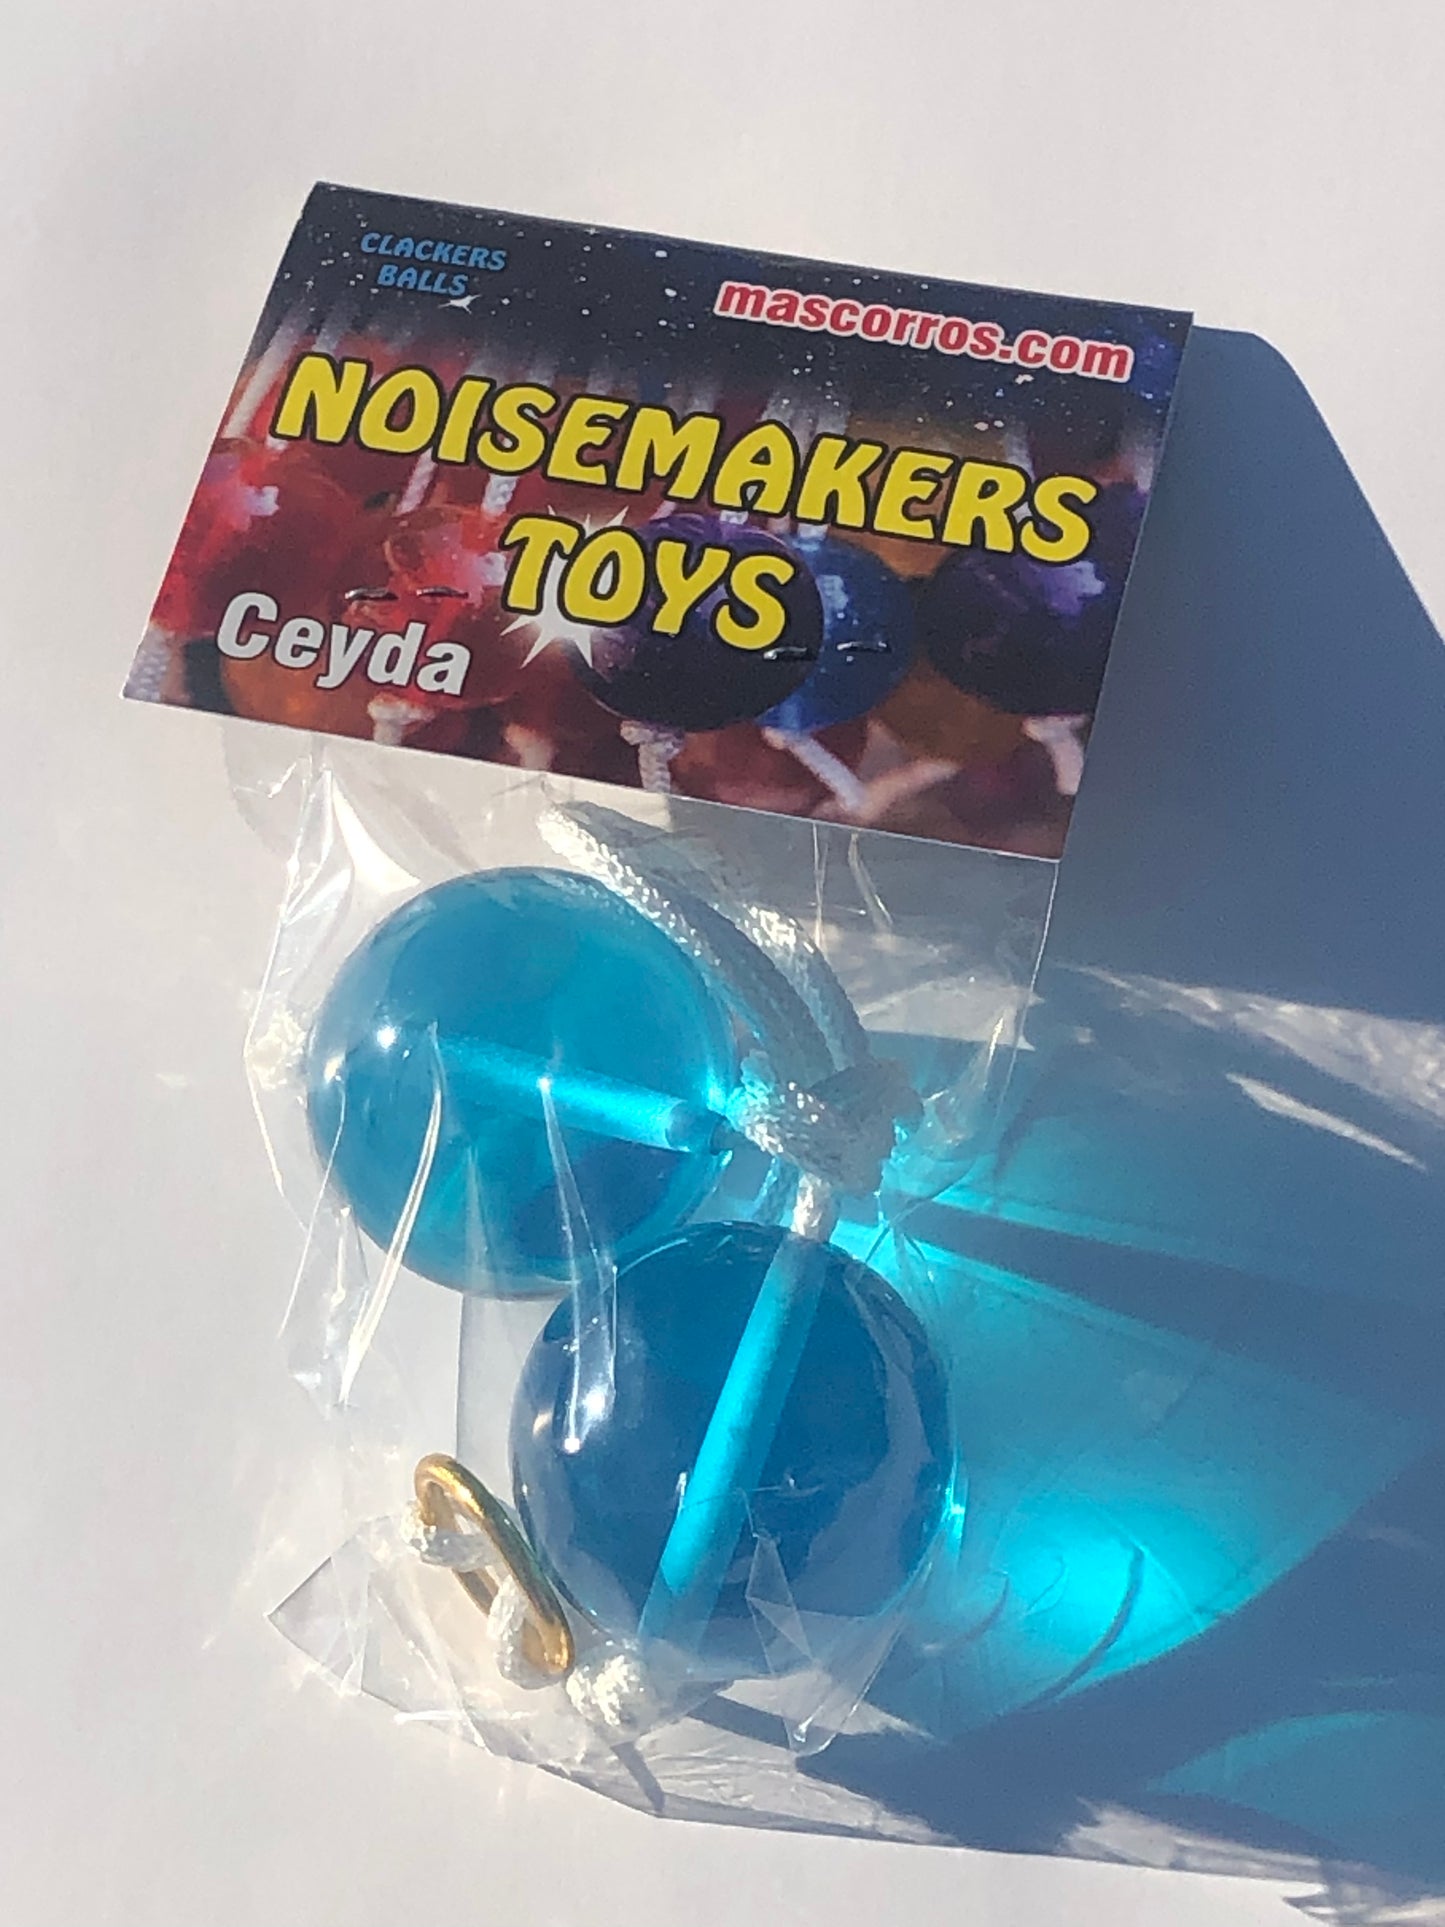 Ceyda Clackers Click Clacks Noise Maker Toy (Blue)